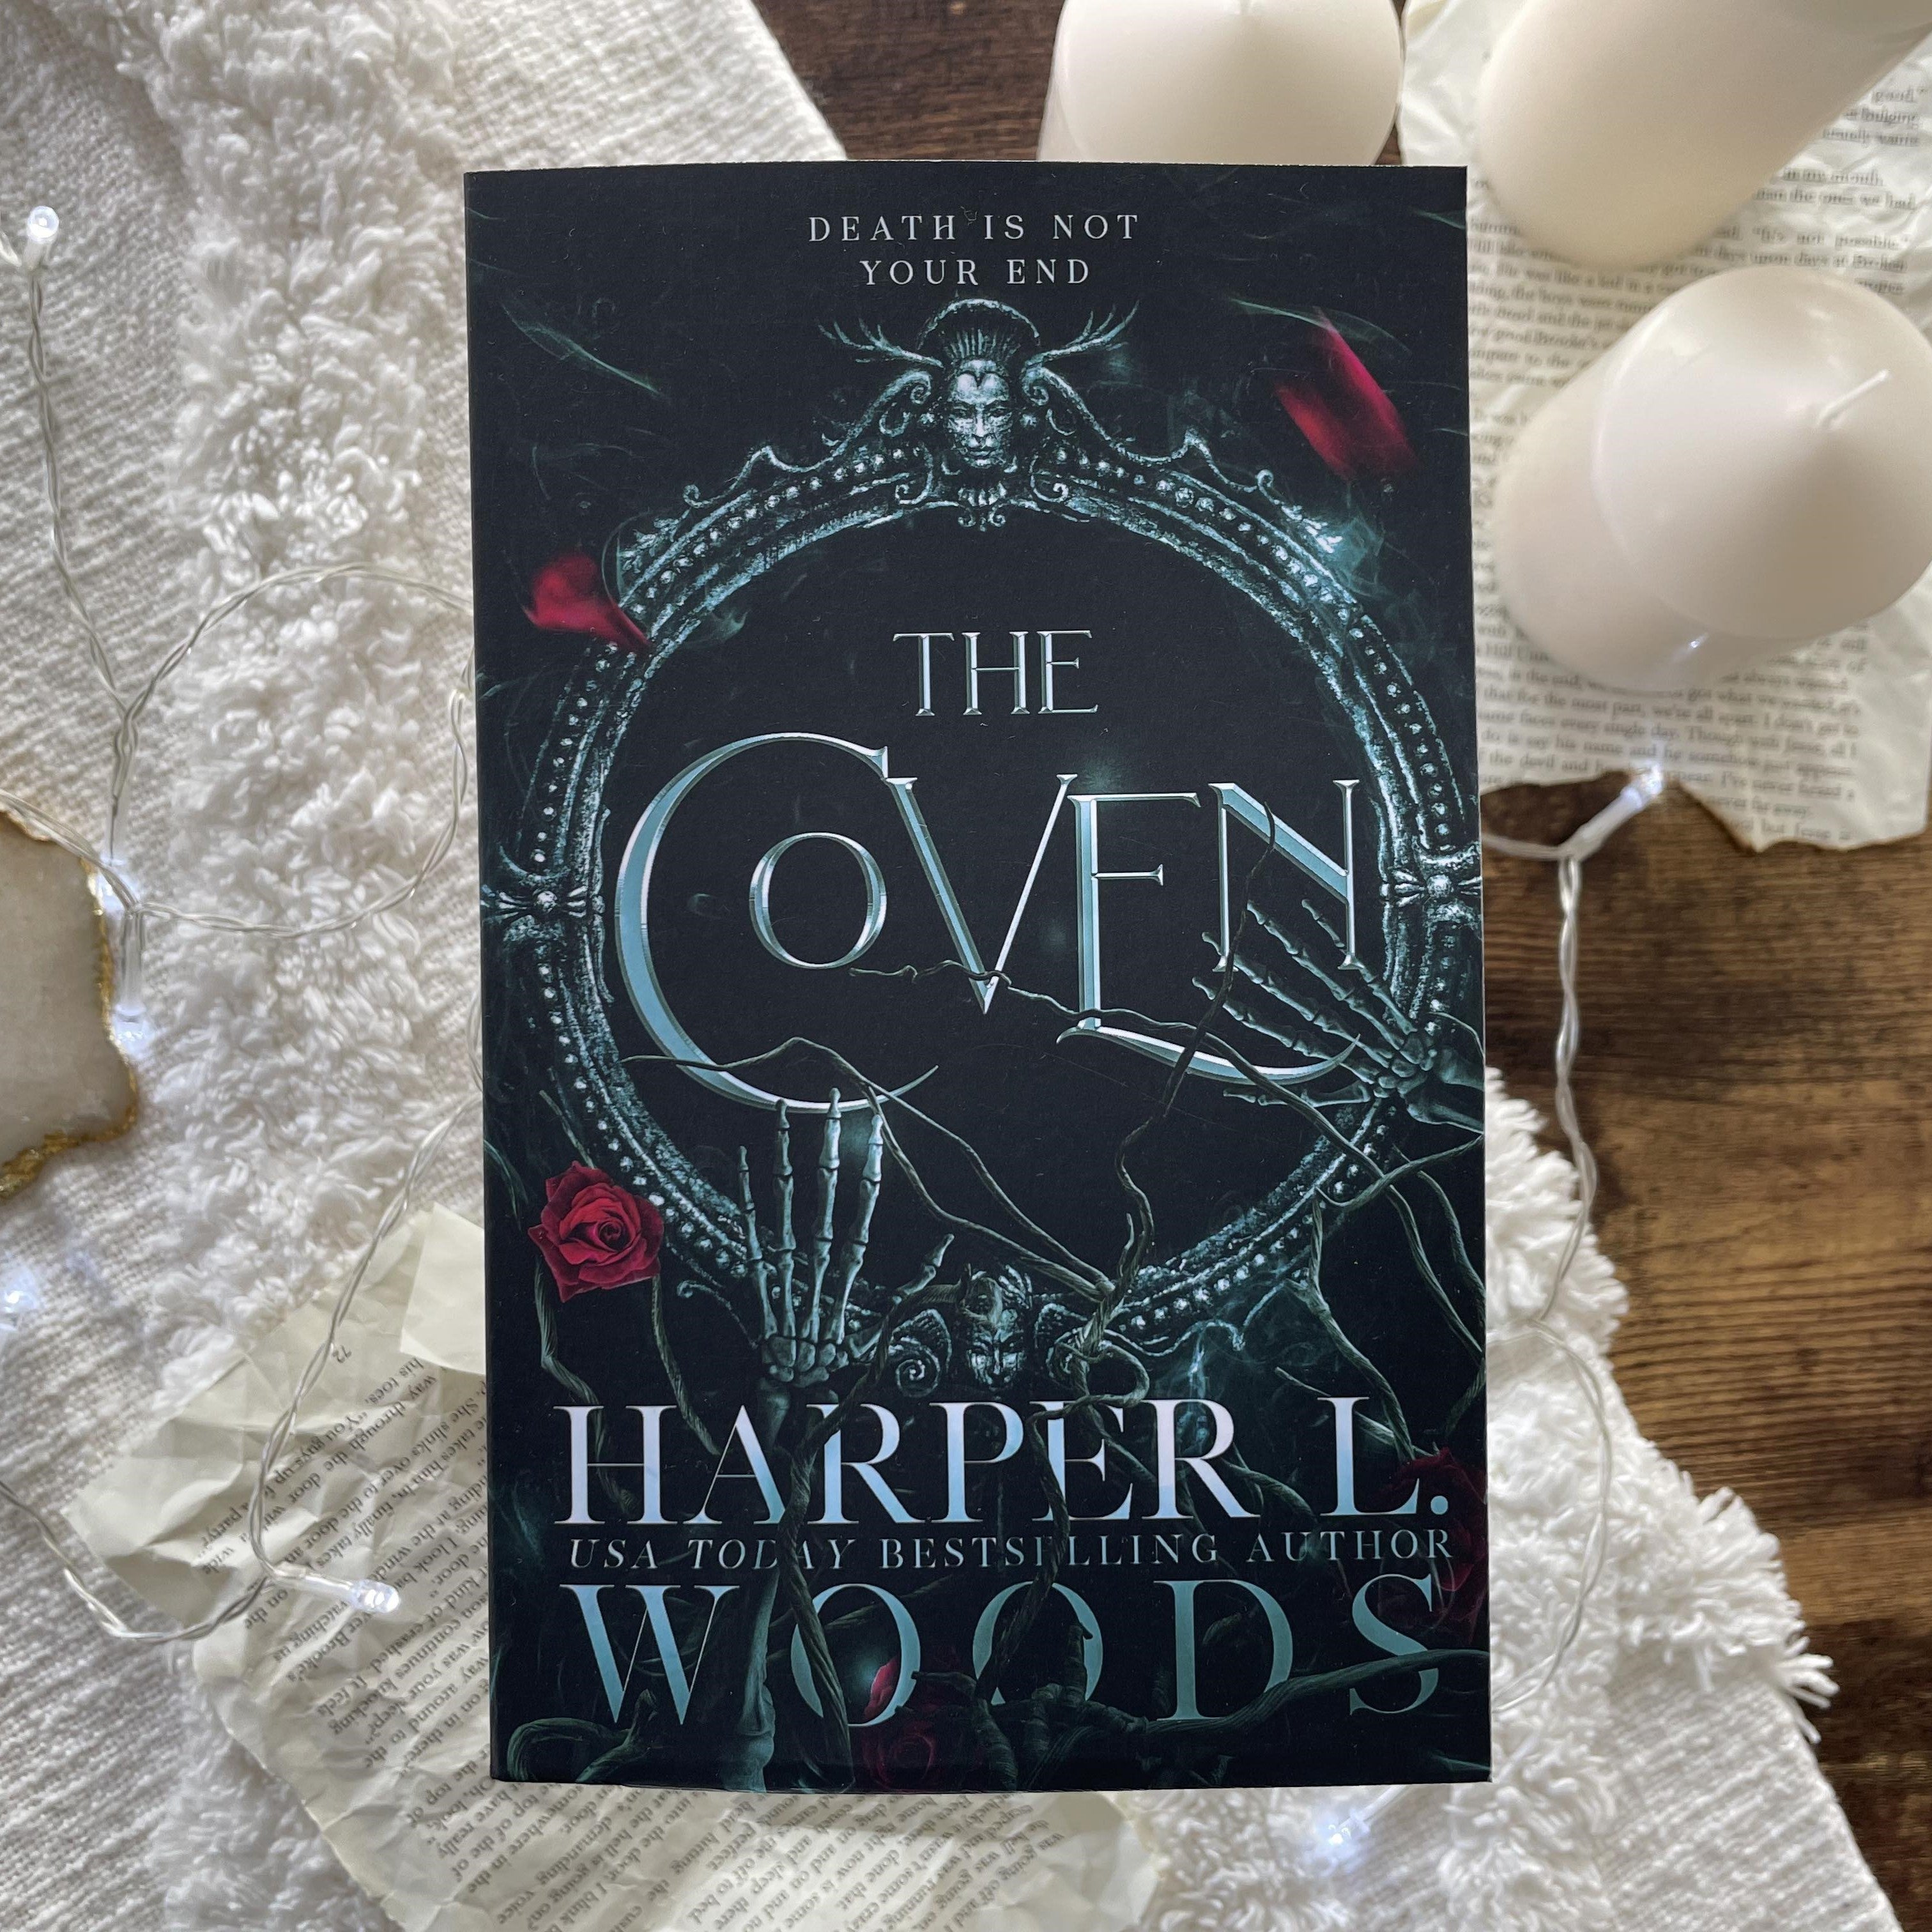 Coven of Bones by Harper L. Woods